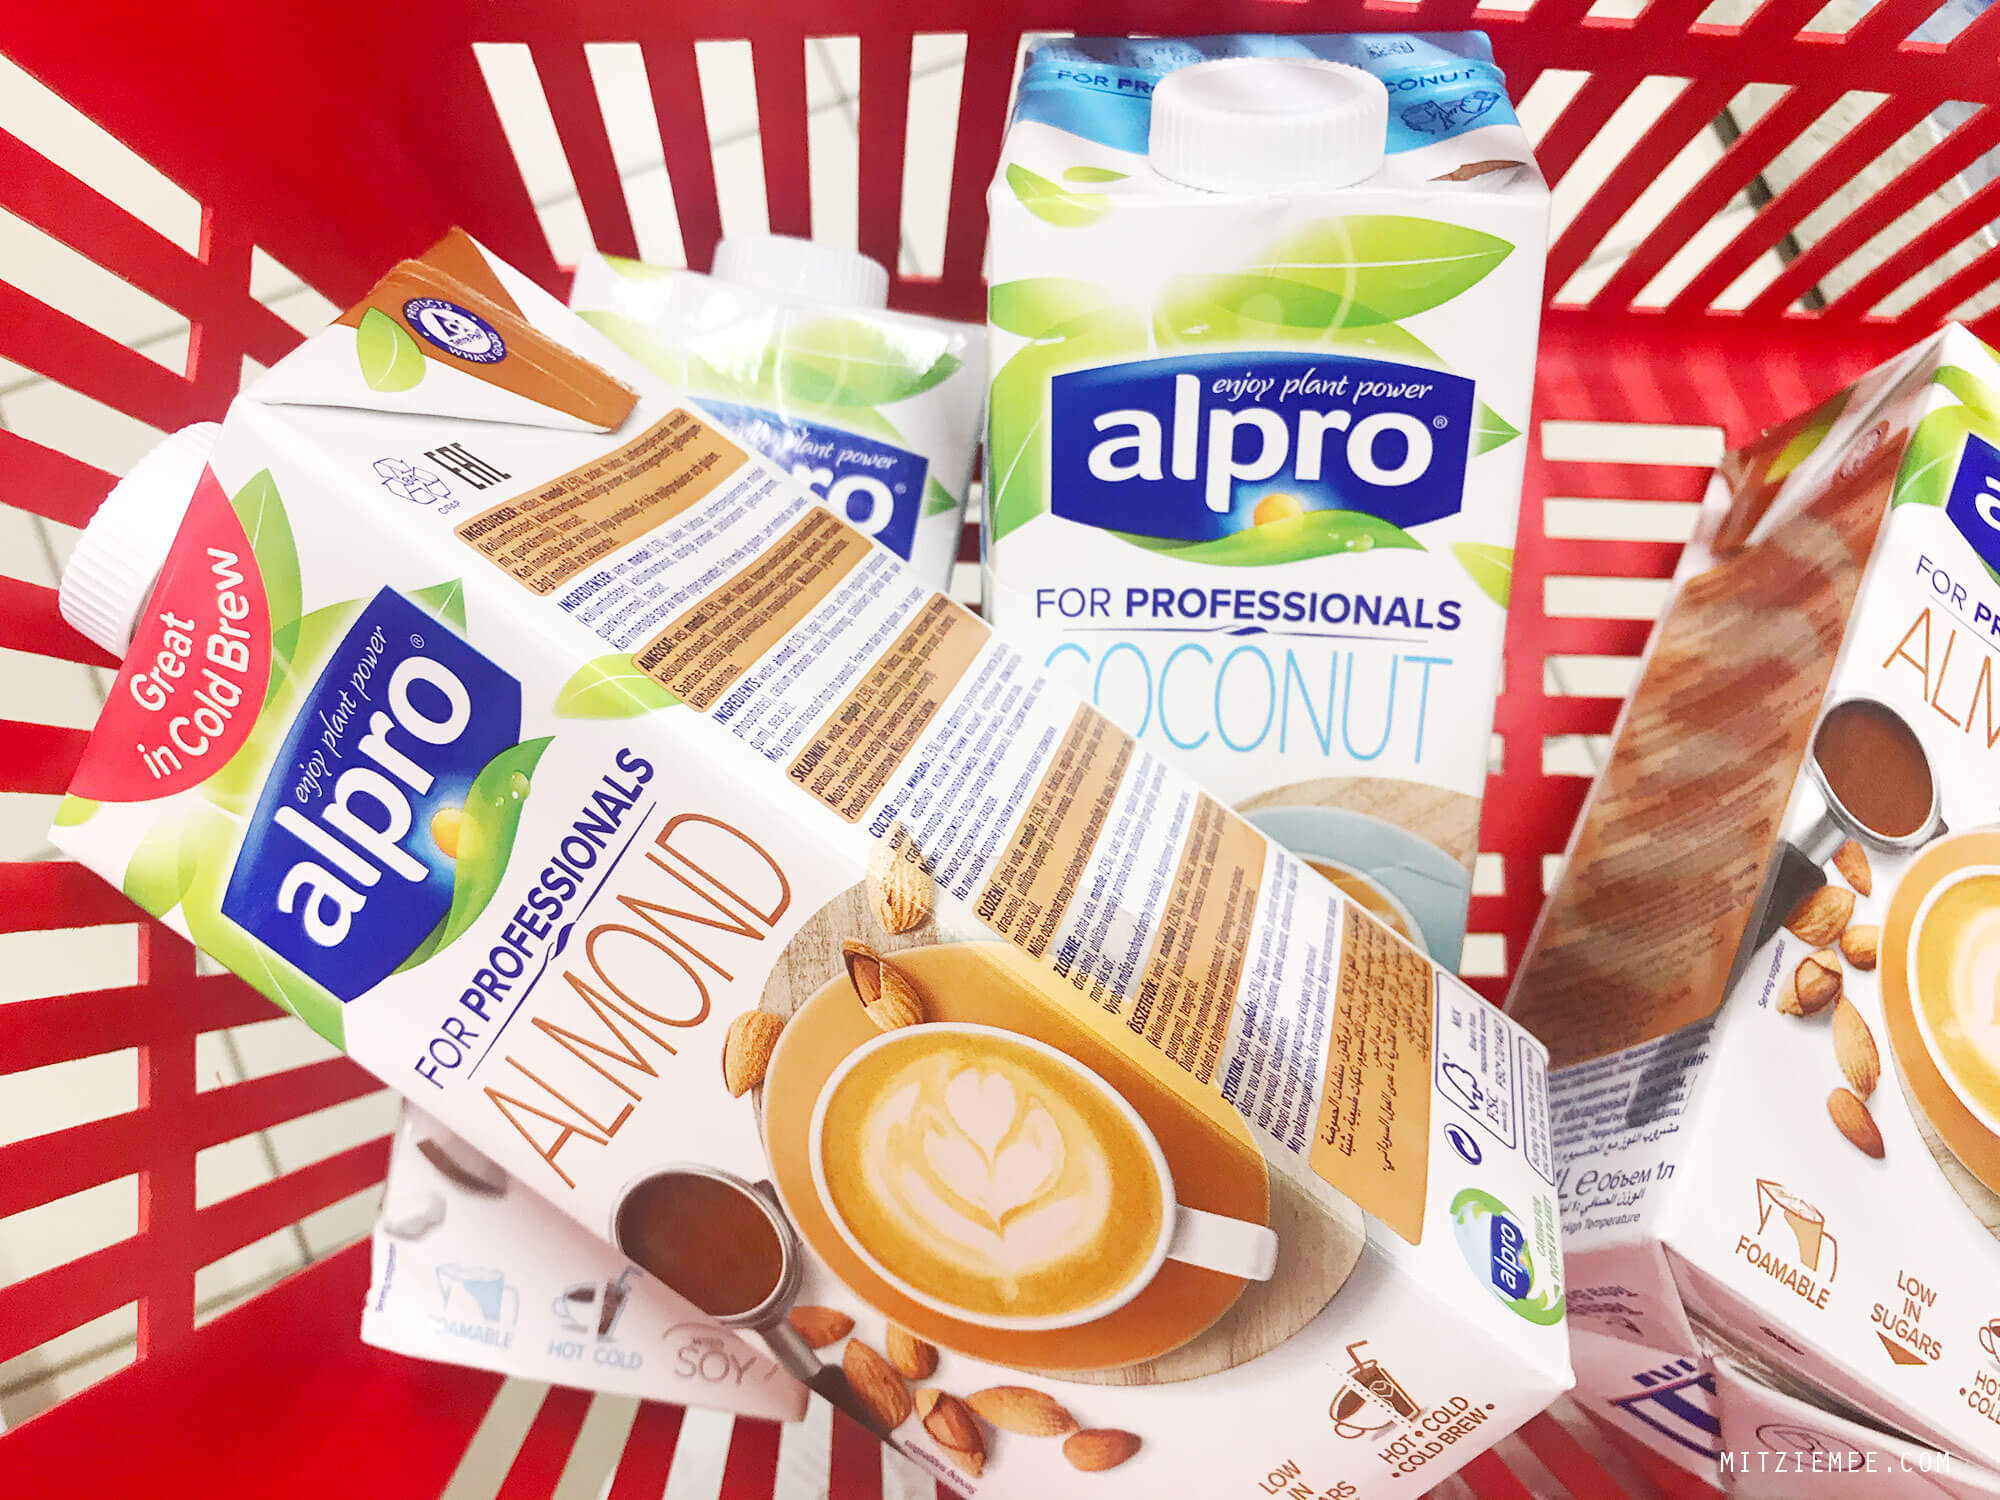 Alpro Coconut Milk for Professionals and Alpro Almond milk for Professionals, non-dairy milk